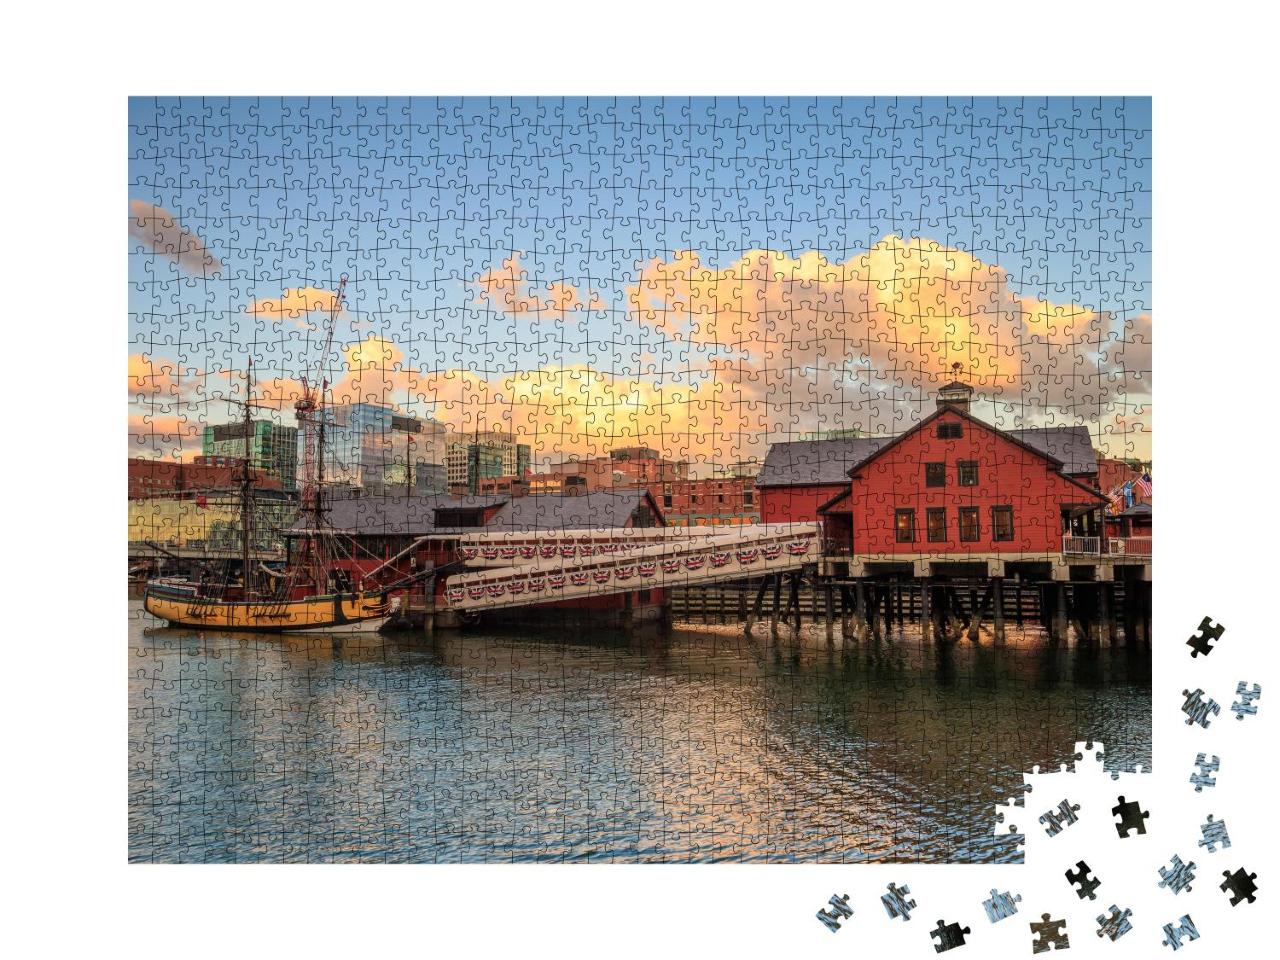 Puzzle 1000 Teile „Boston Harbor im Sonnenuntergang, Massachusetts, USA“